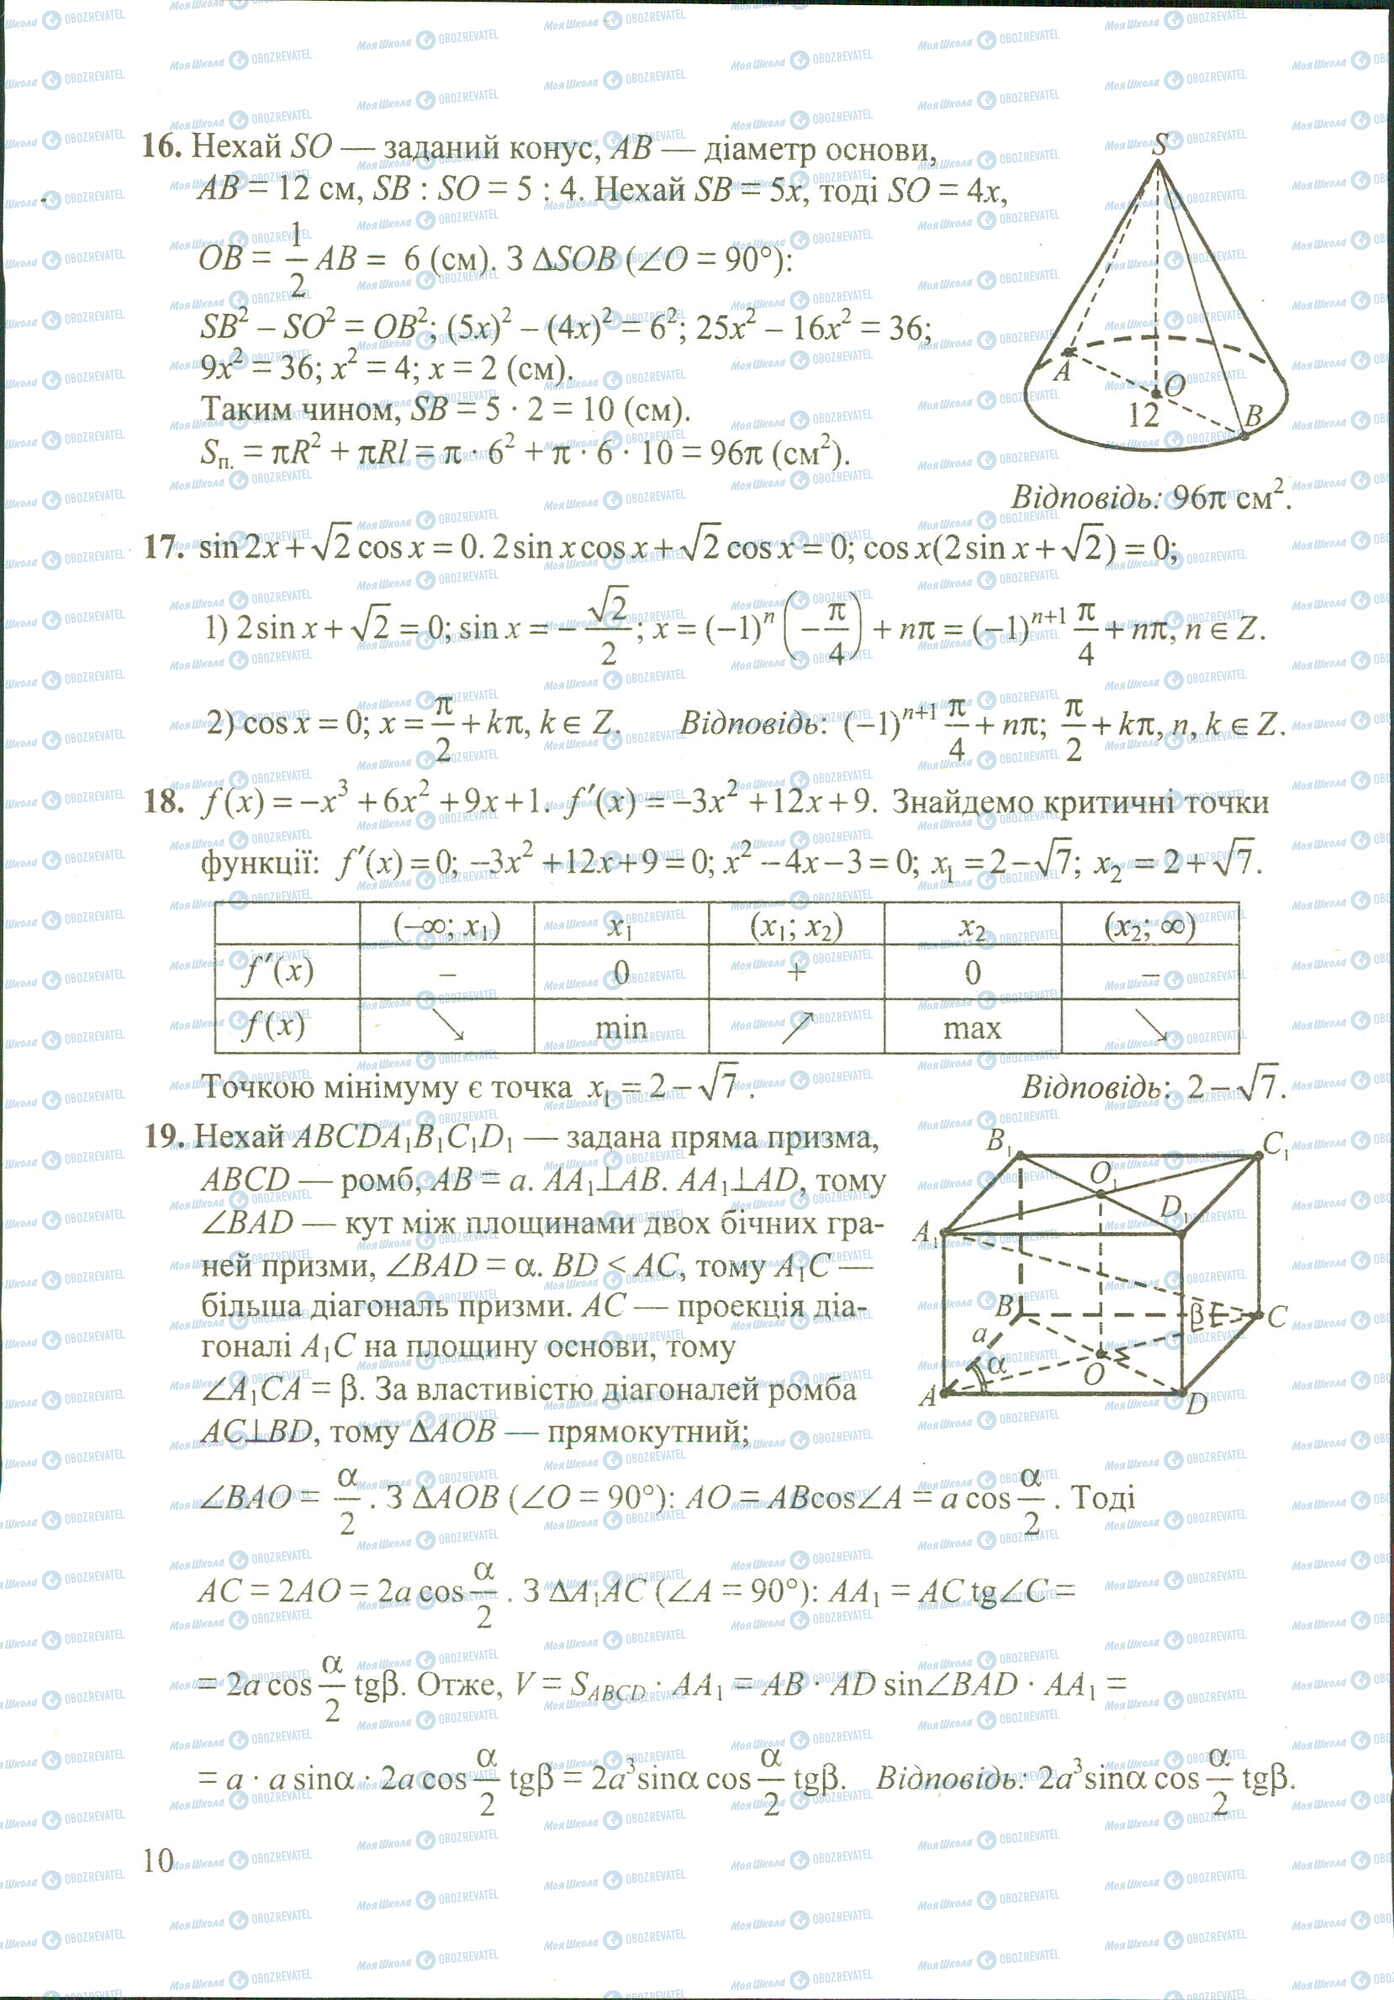 ДПА Математика 11 класс страница image0000004B